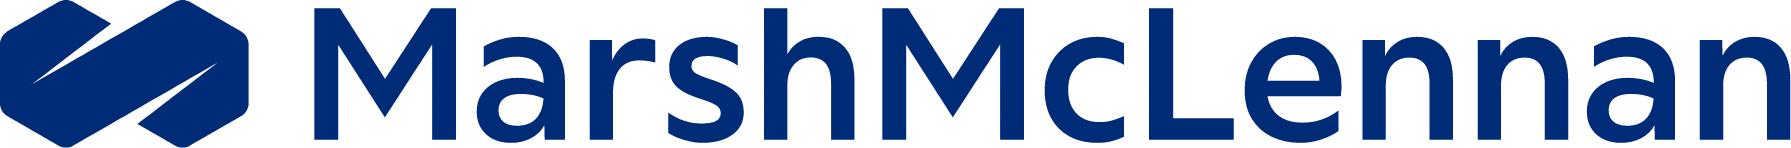 Marsh & McLennan Companies logo large (transparent PNG)